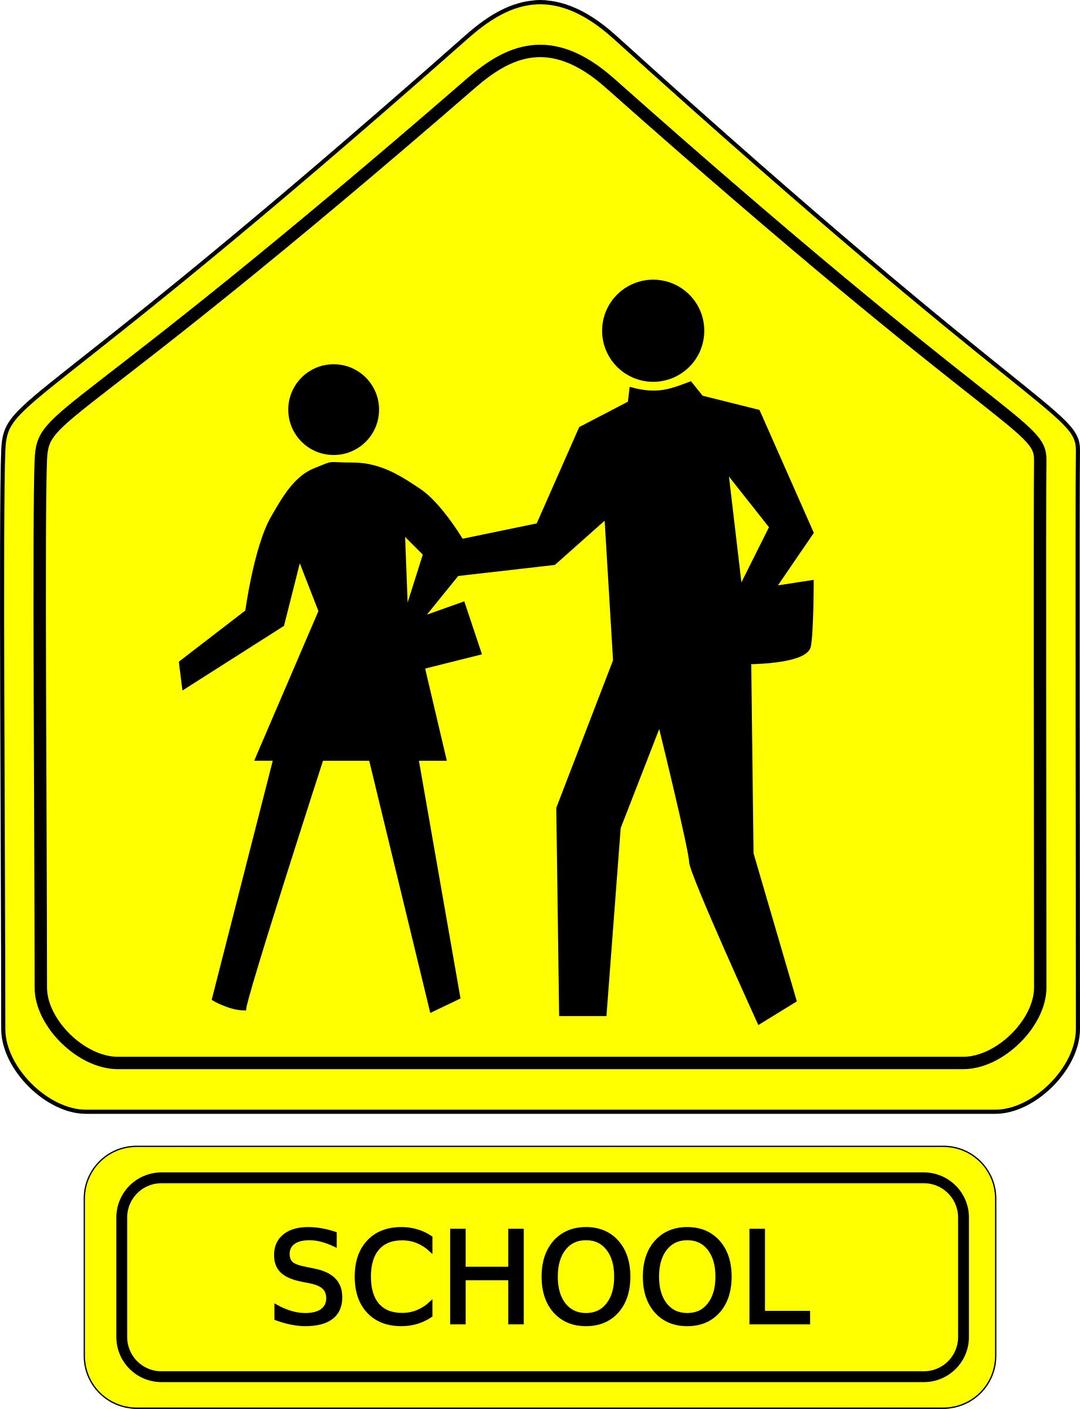 School Crossing Caution png transparent